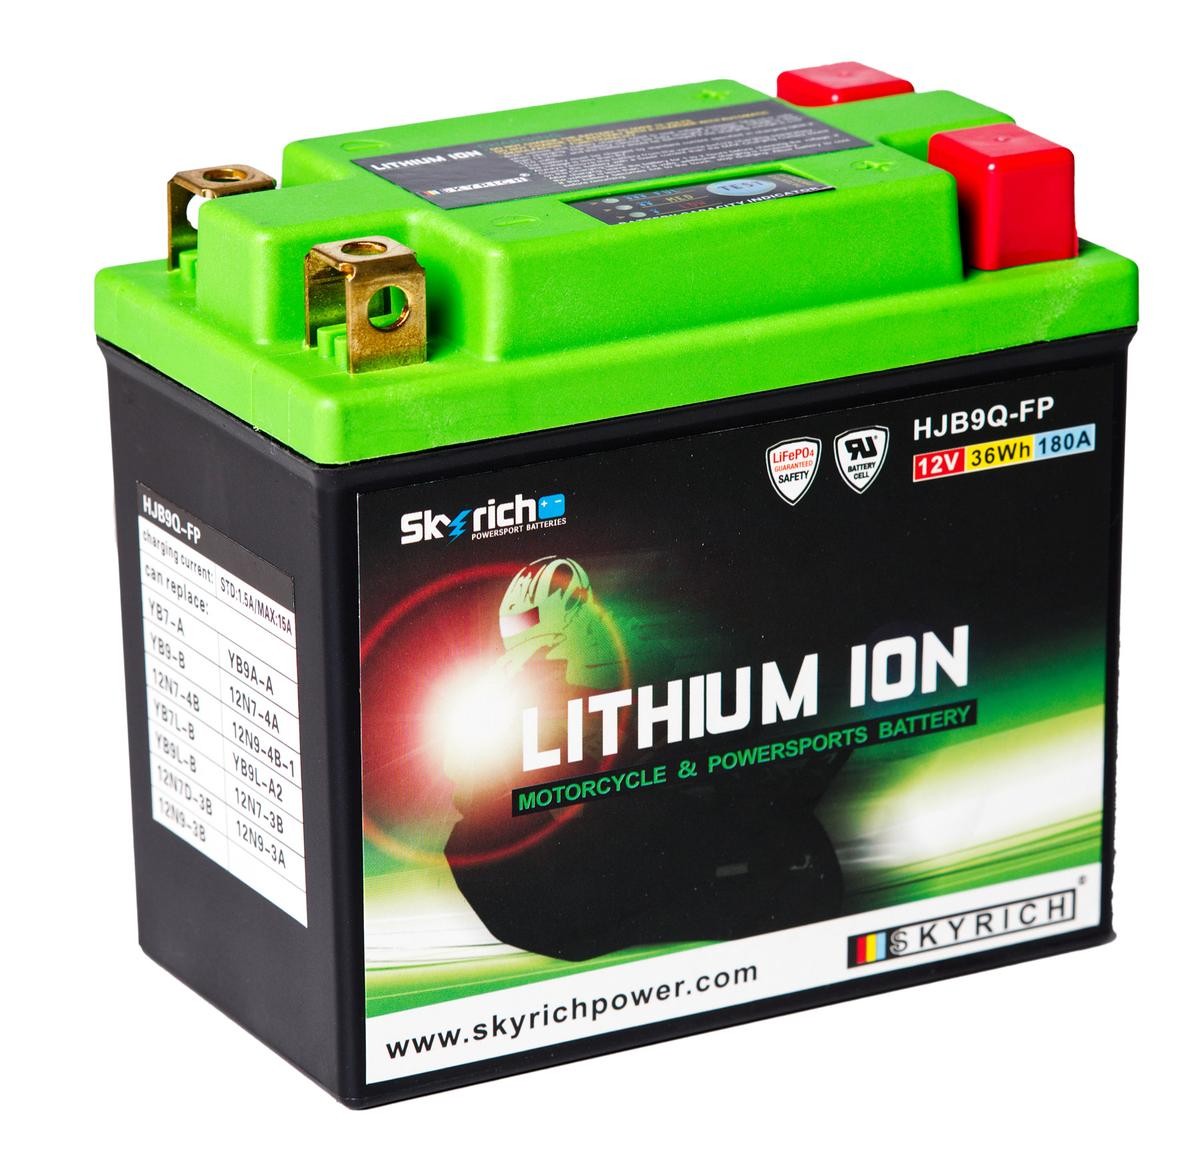 DAELIM DAYSTAR Batterie 12V 3Ah 180A N Li-Ionen-Batterie SKYRICH LITHIUM ION HJB9Q-FP